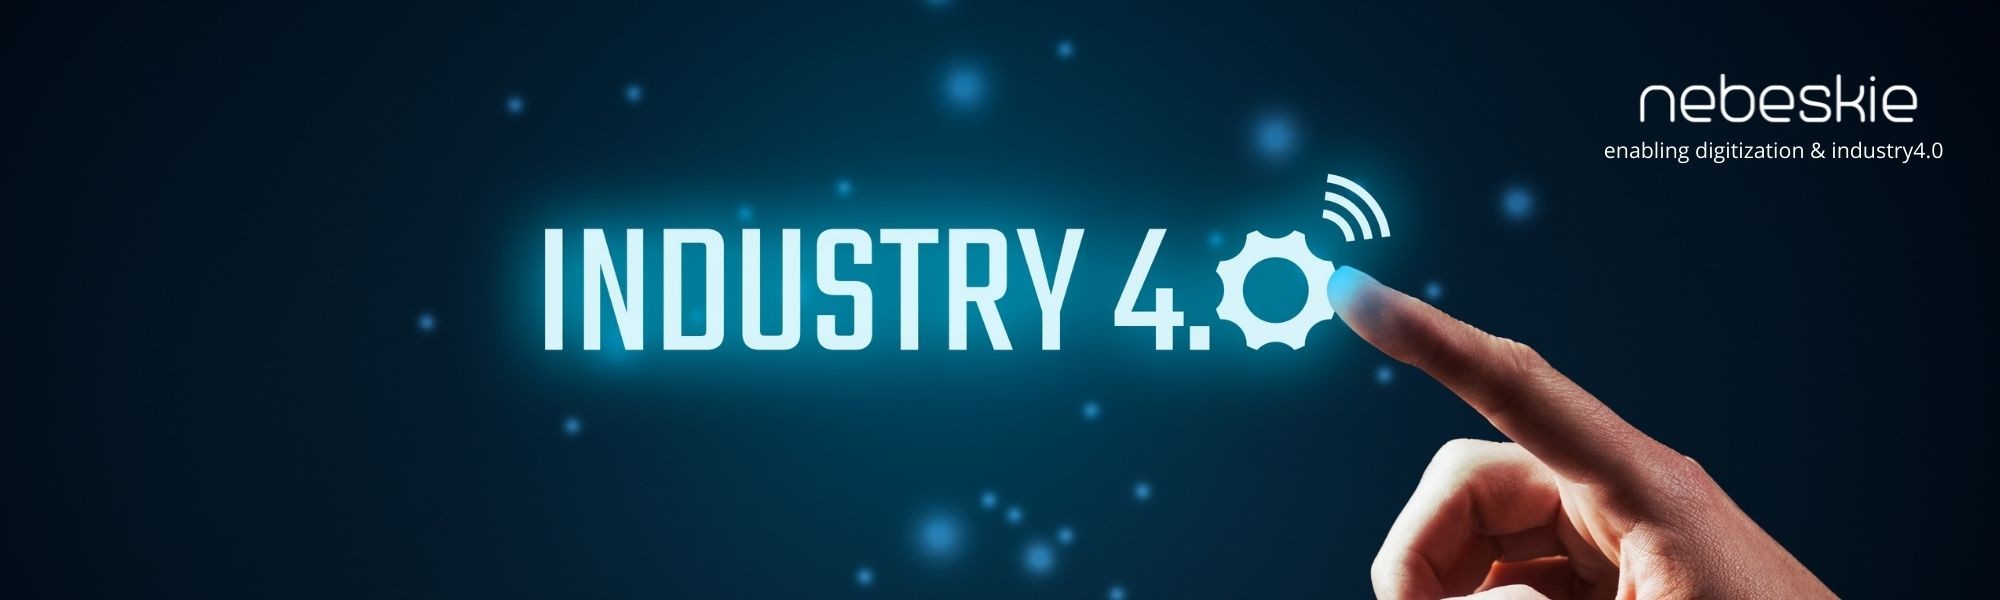 Industry 4.0 Nebeskie